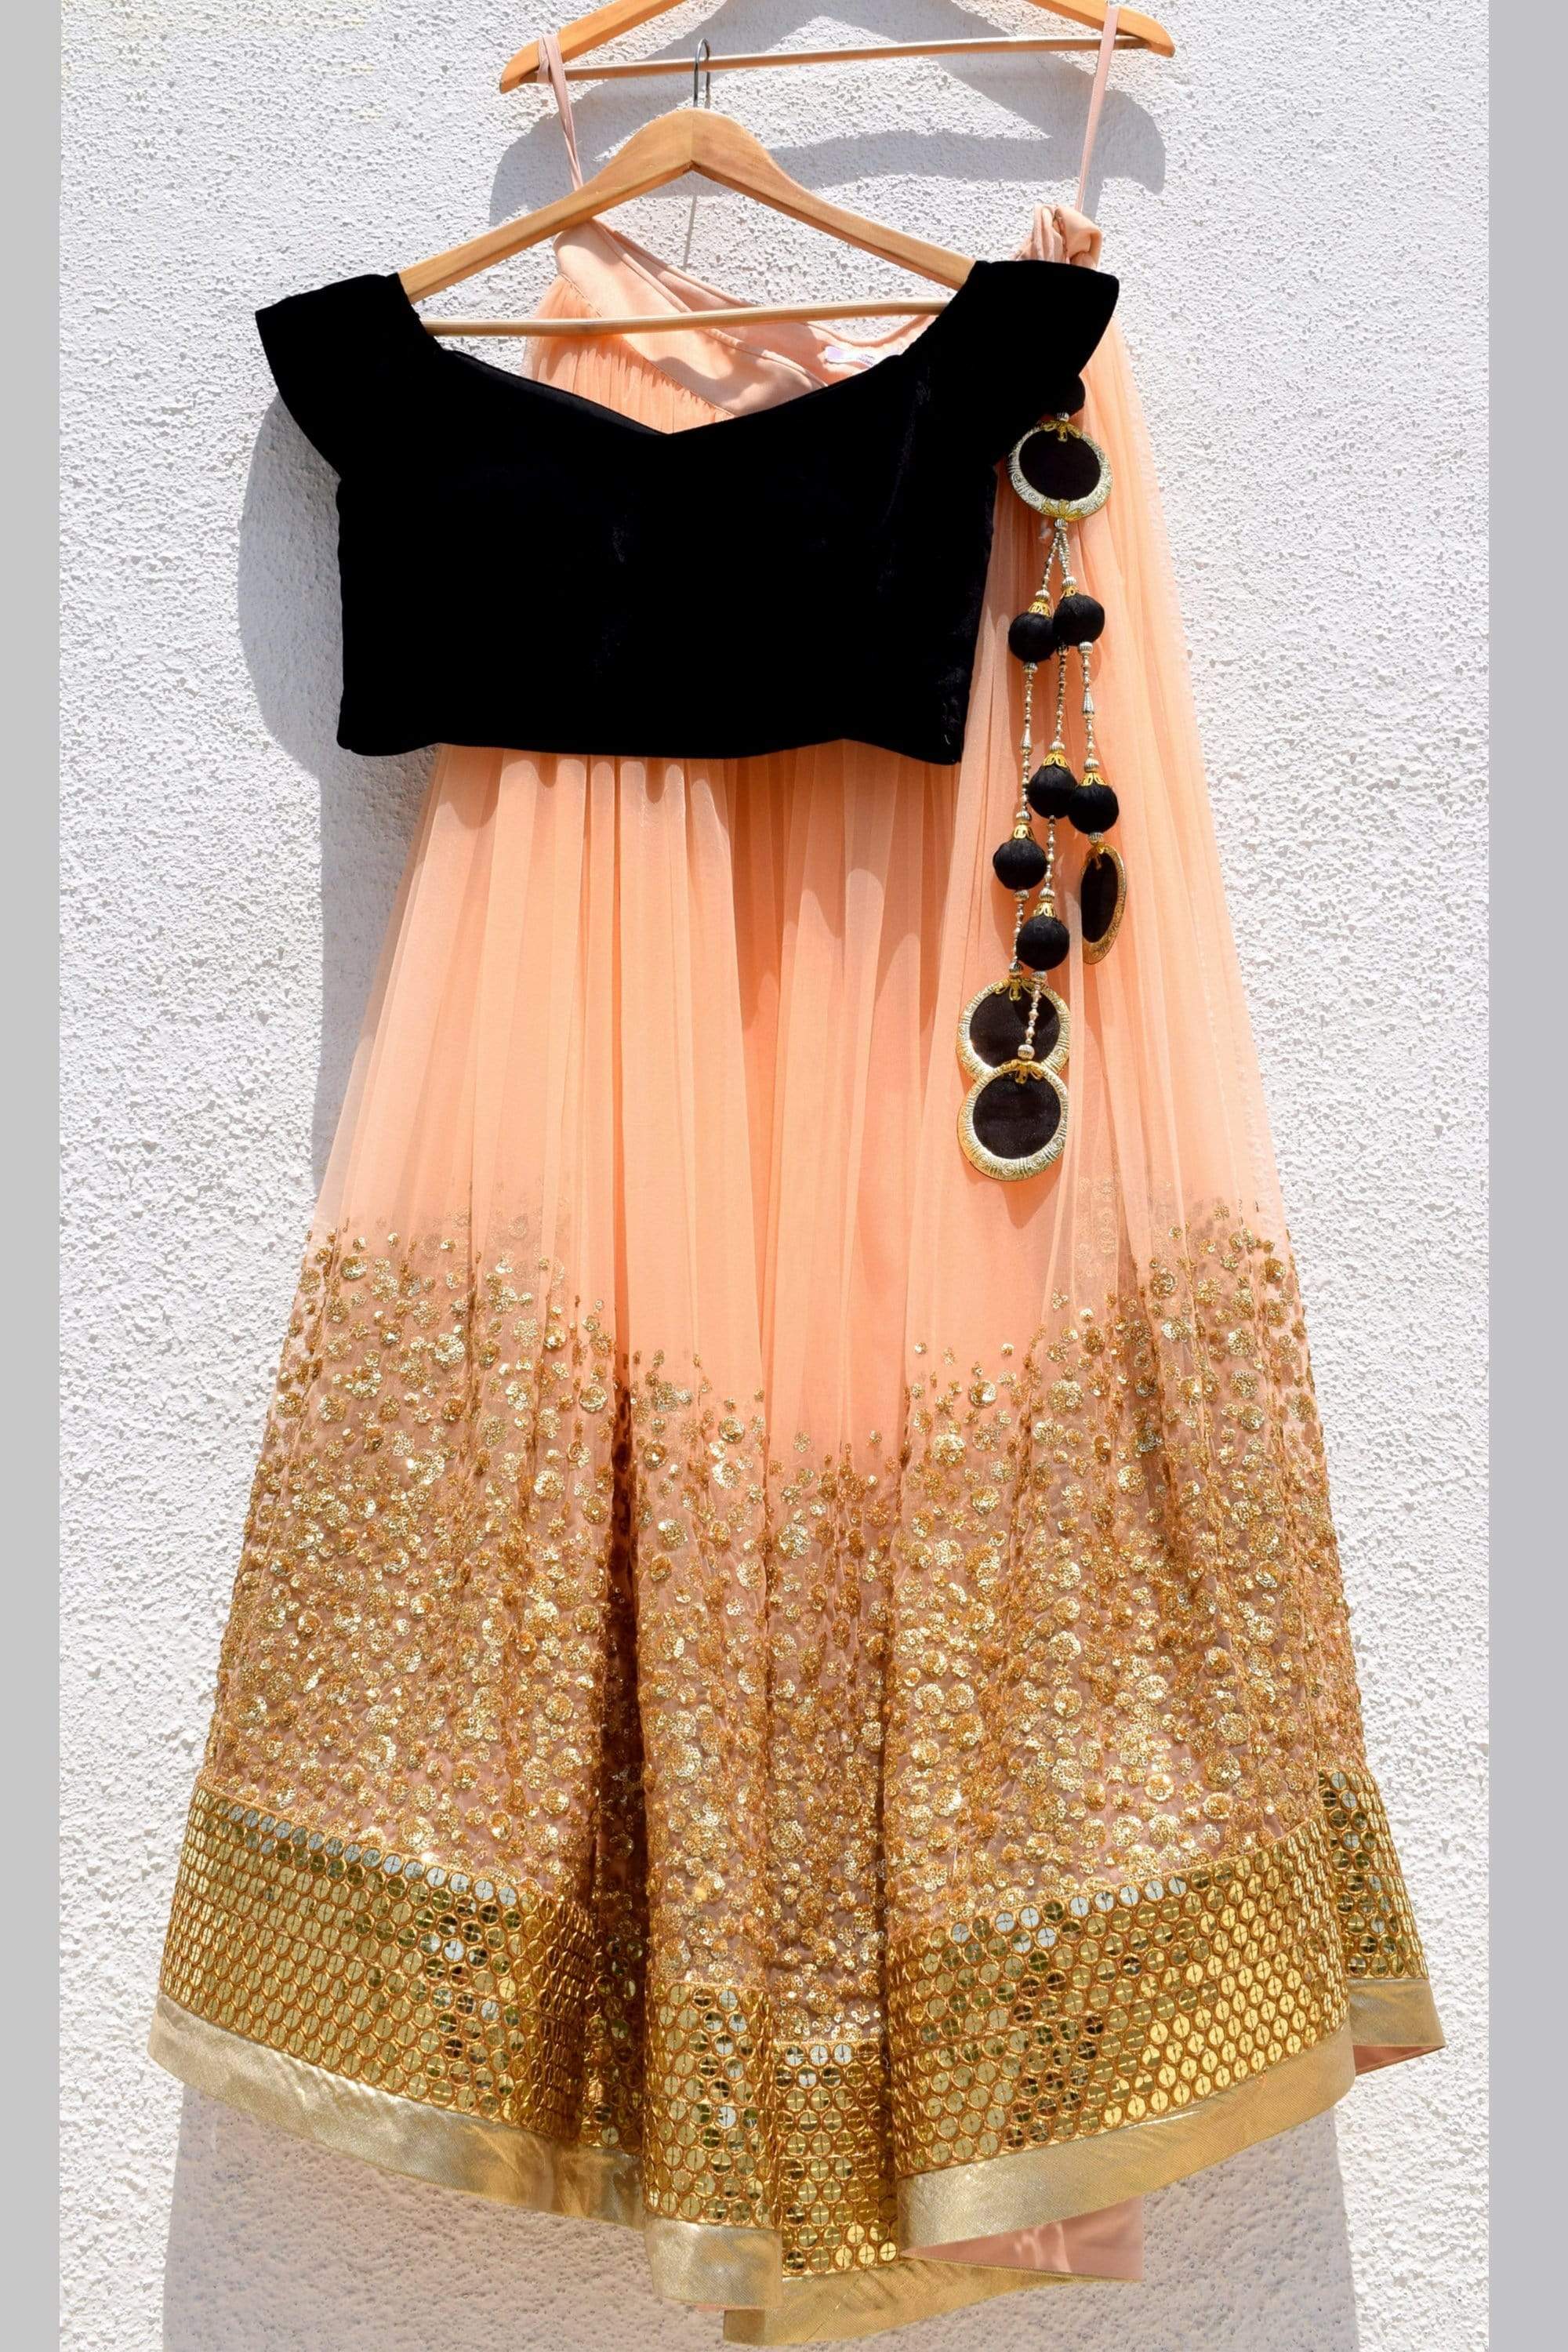 Black Soft Net Embroidered Lehenga With Velvet Blouse Online at Rs 1599 |  Net Lehenga, नेट लहंगा चोली, नेट लेहेंगा चोली - Skyblue Fashion, Surat |  ID: 2850460631455